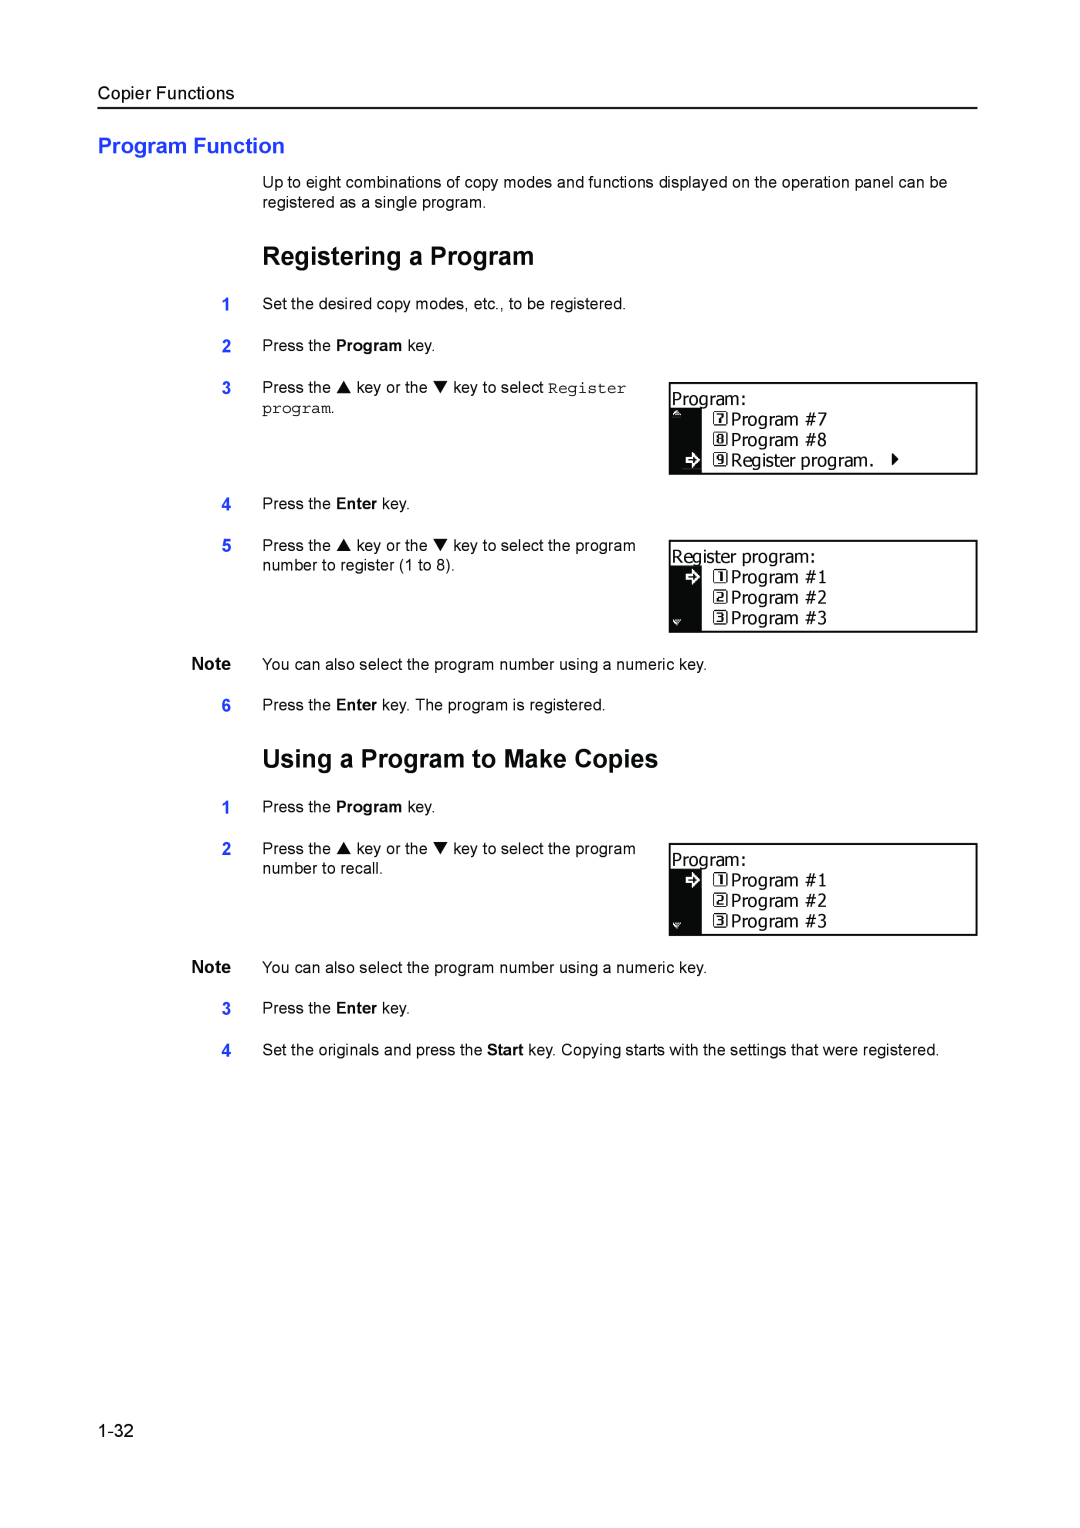 Kyocera 1650, 2050, 2550 Registering a Program, Using a Program to Make Copies, Program Function, 1-32, Copier Functions 